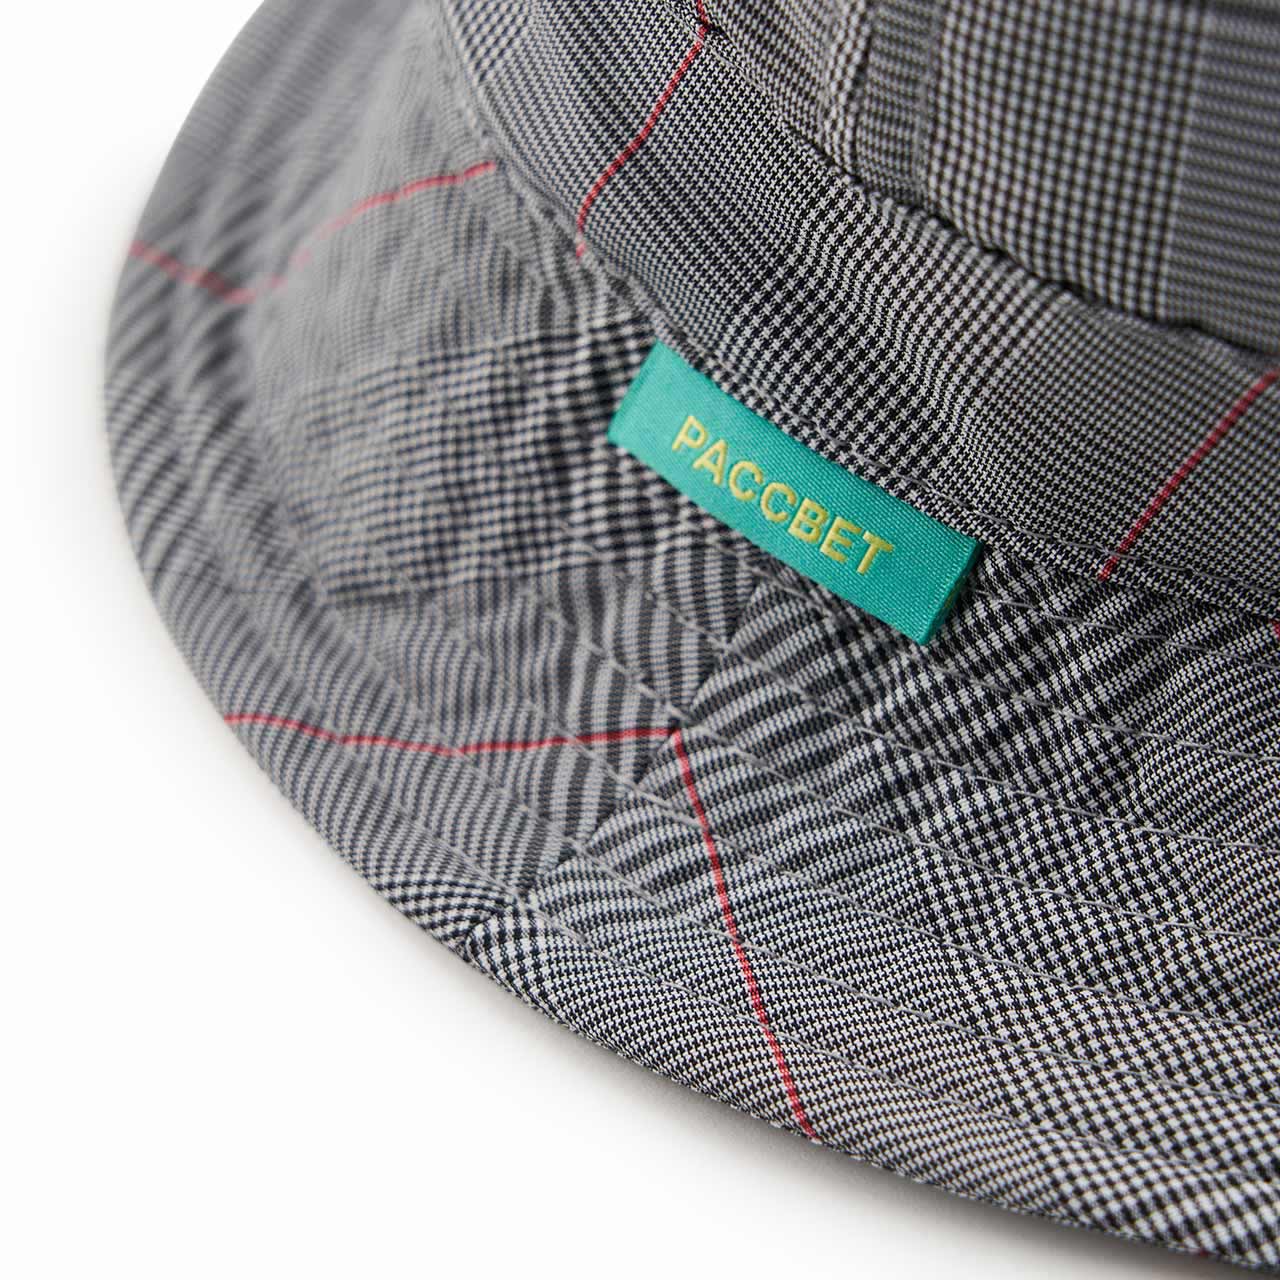 rassvet rassvet nylon bucket hat (grey check) PACC9K003